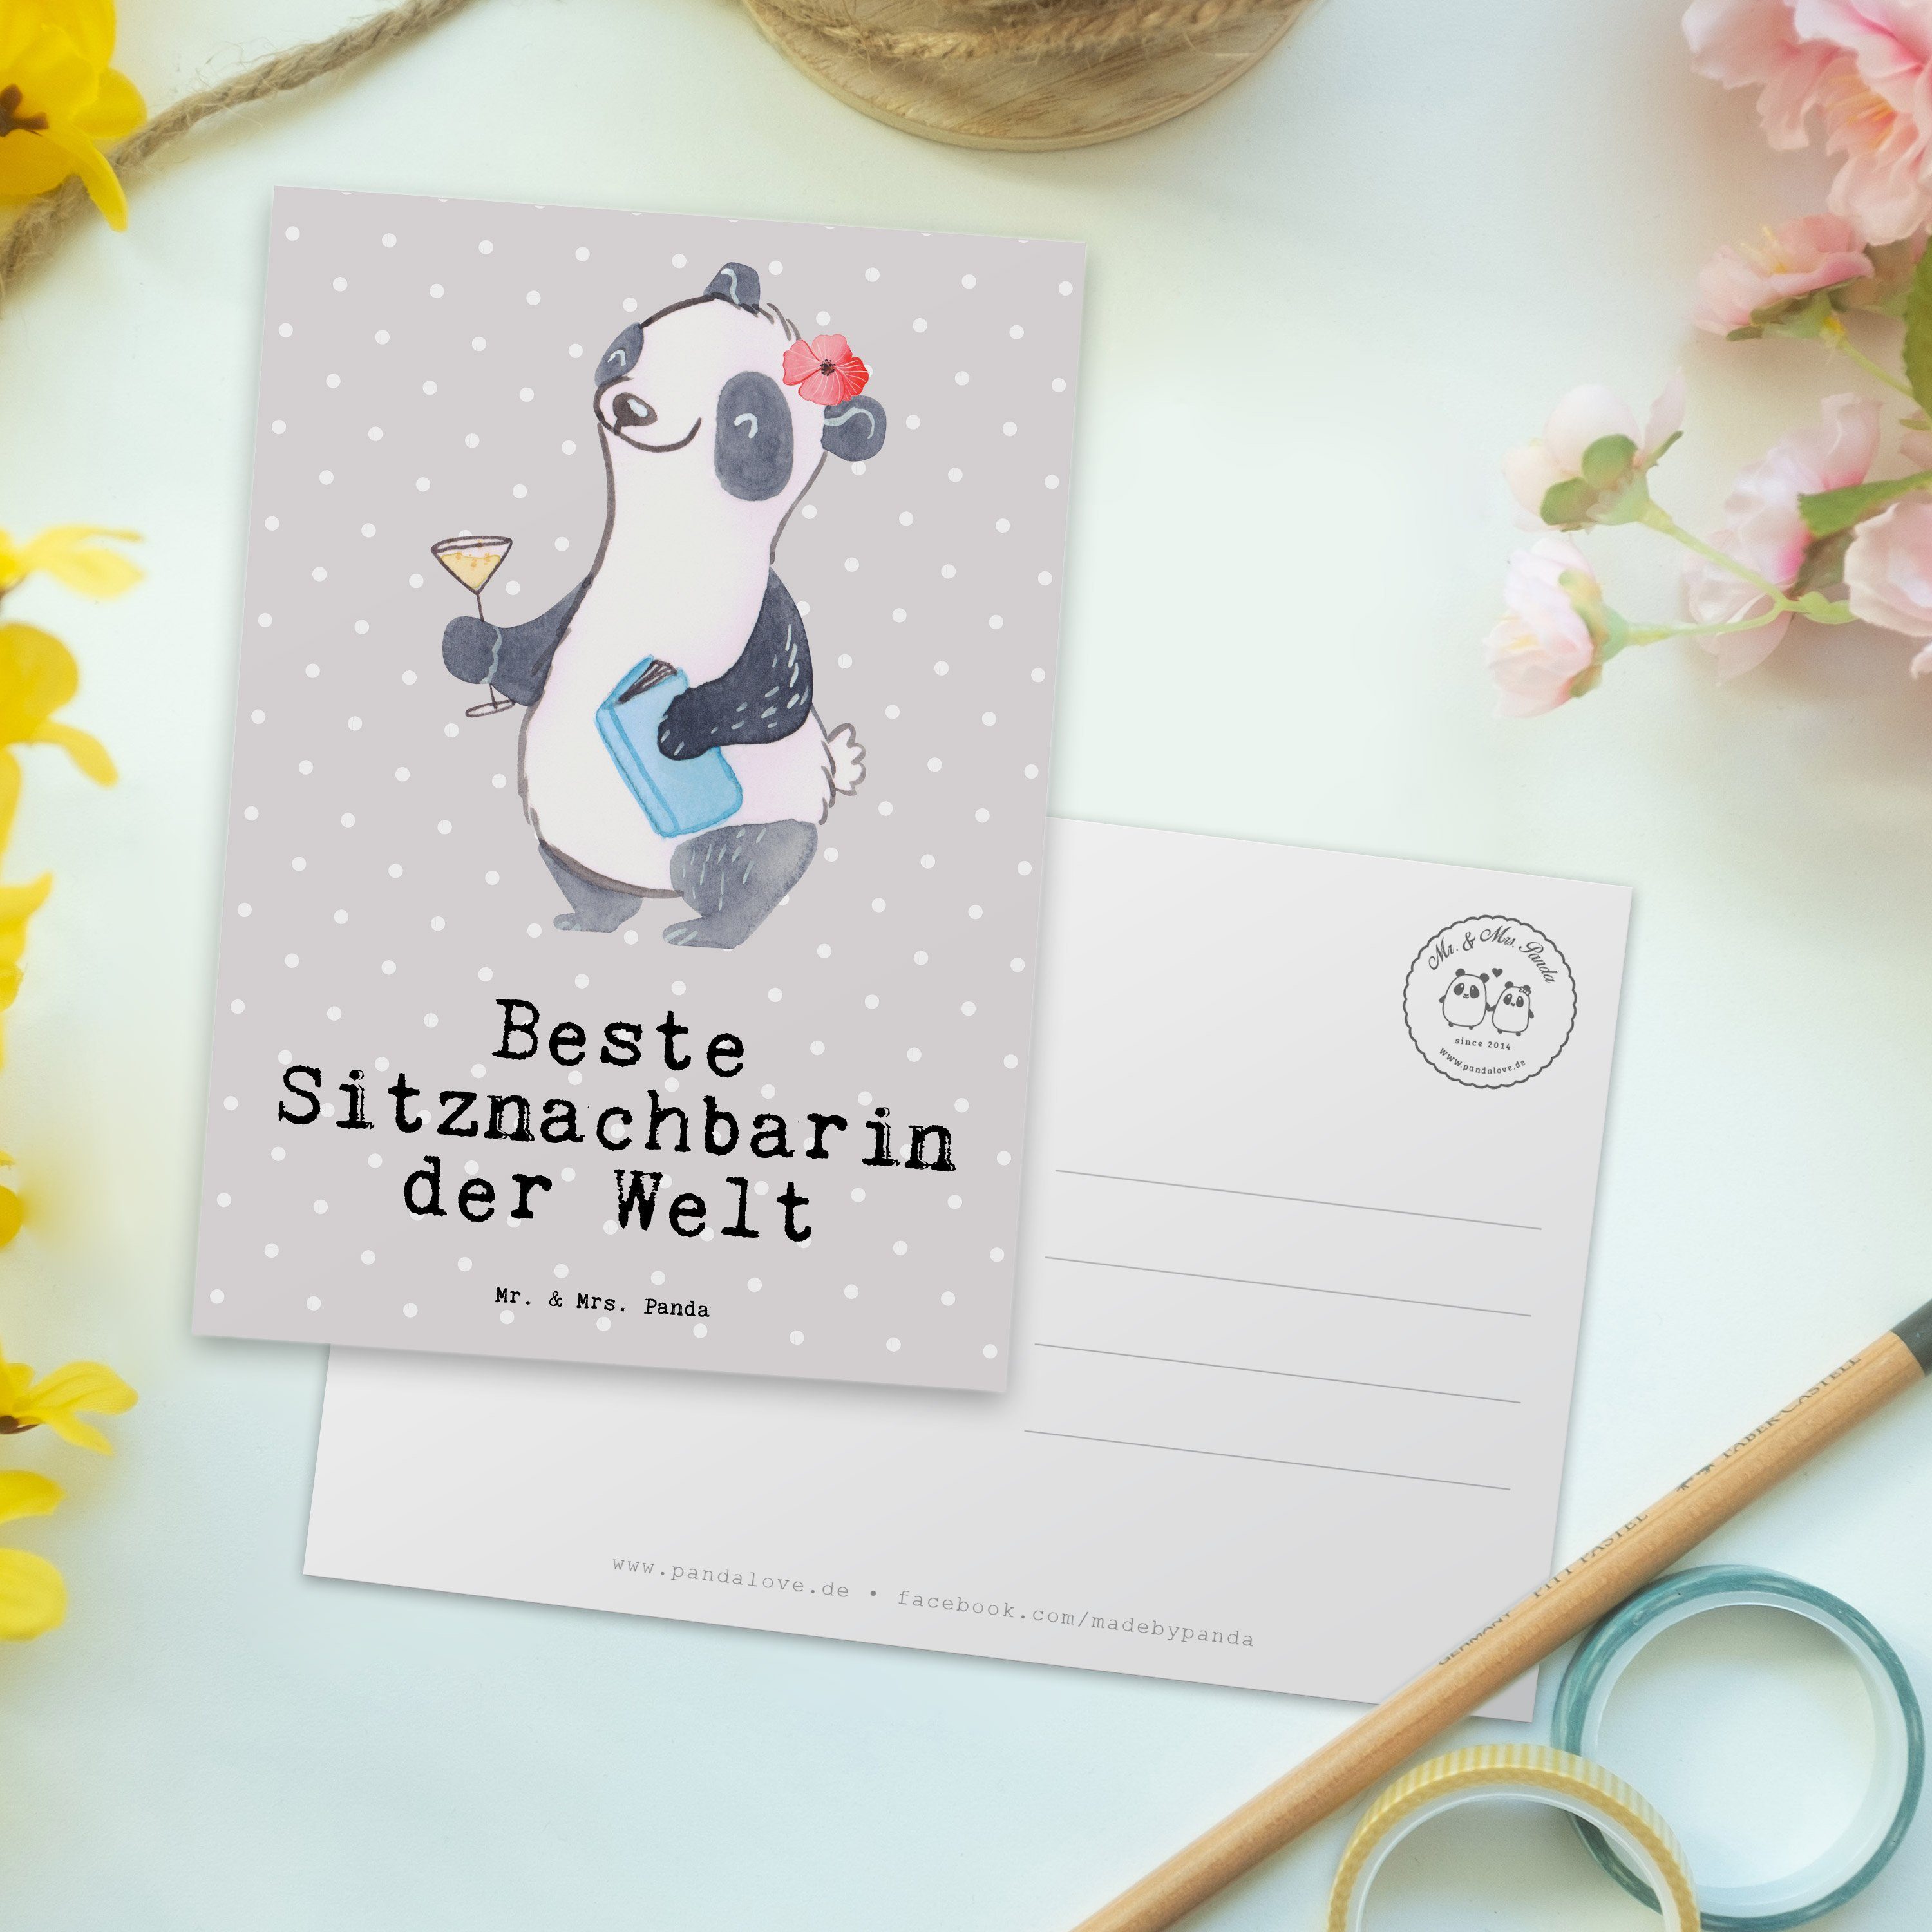 Mrs. Geschen - Mr. Geschenk, der Panda Grau - & Beste Sitznachbarin Postkarte Panda Welt Pastell